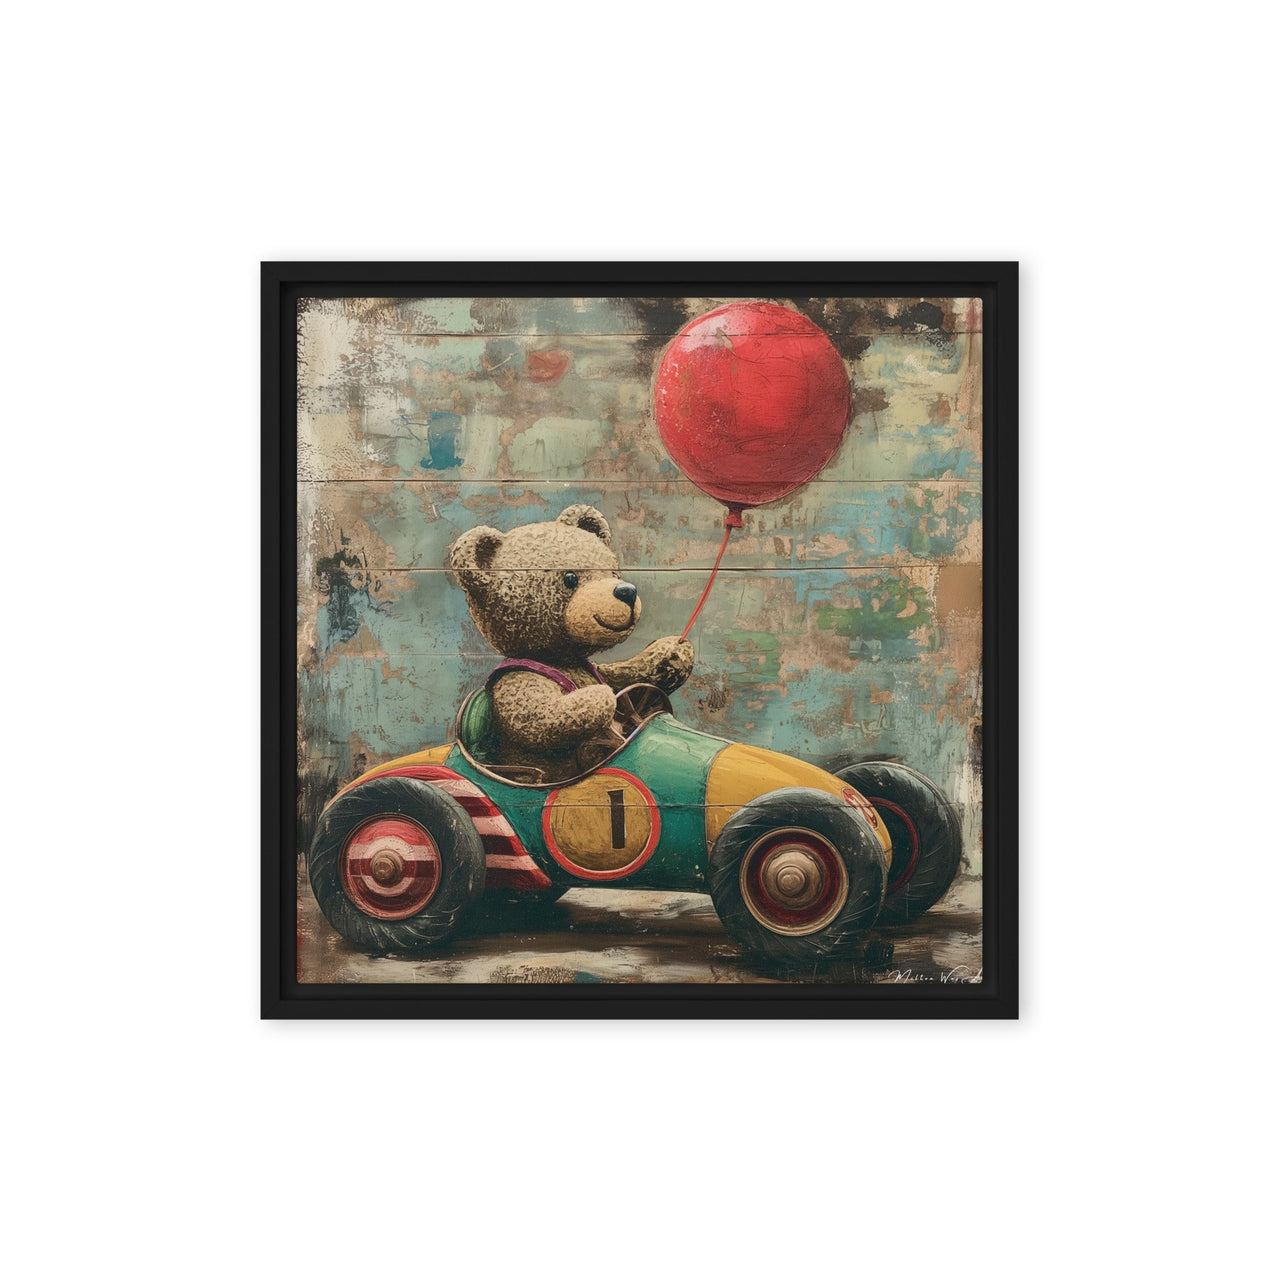 Vintage Teddy Racer with Red Balloon - Nostalgic Framed Canvas Art Print - Milton Wes Art Framed Wall Art